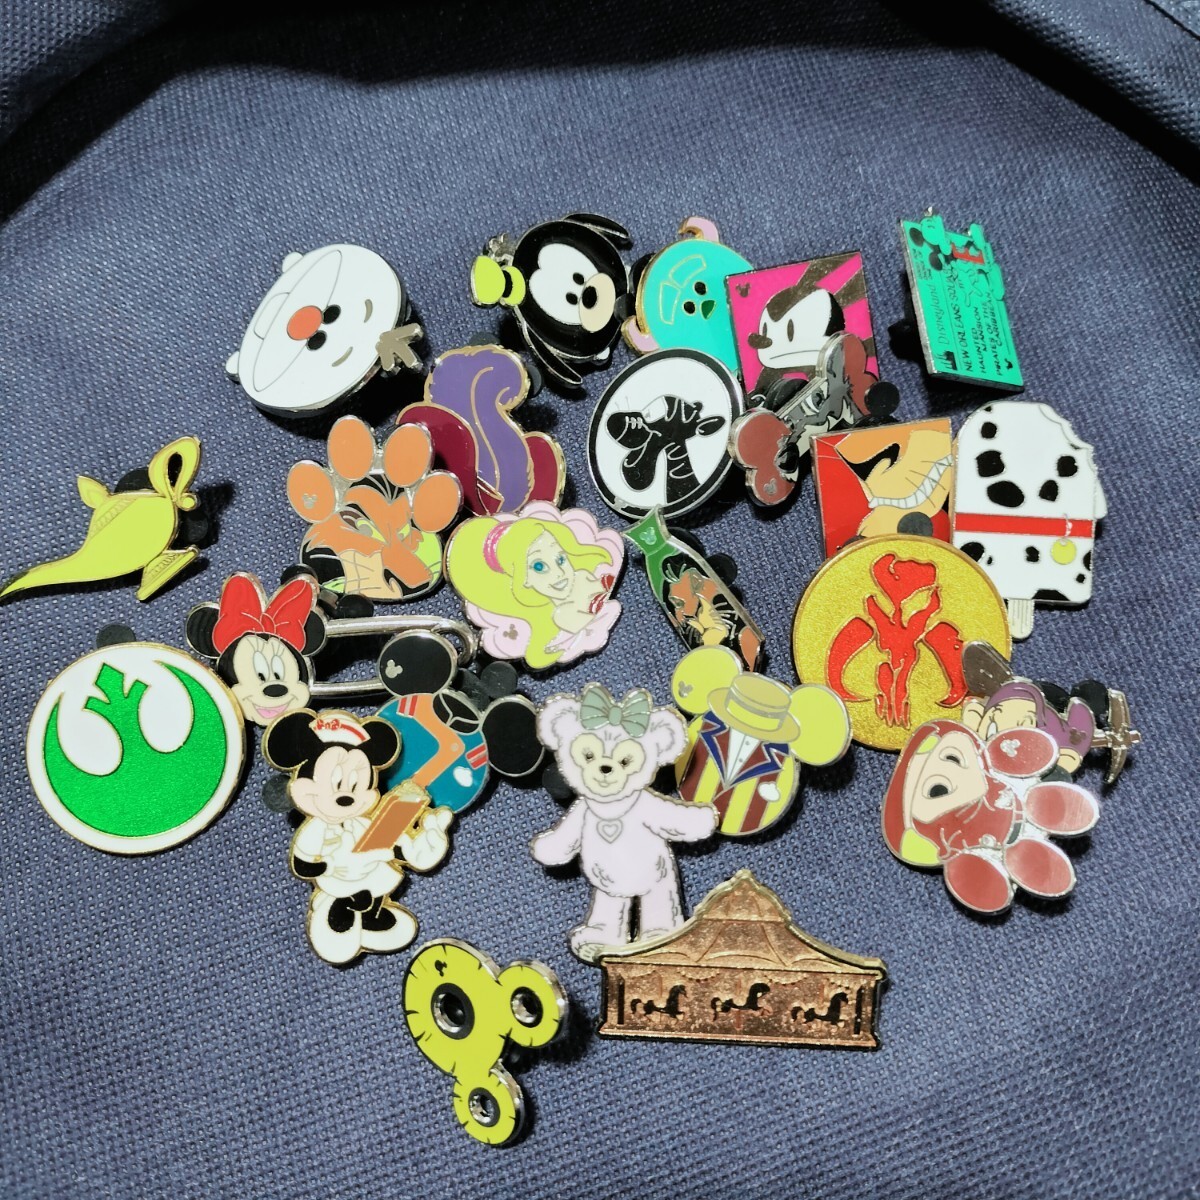 50 piece pin badge Disney pin tore Disney Land for exchange character hope possible on sea Hong Kong free shipping pin trailing 